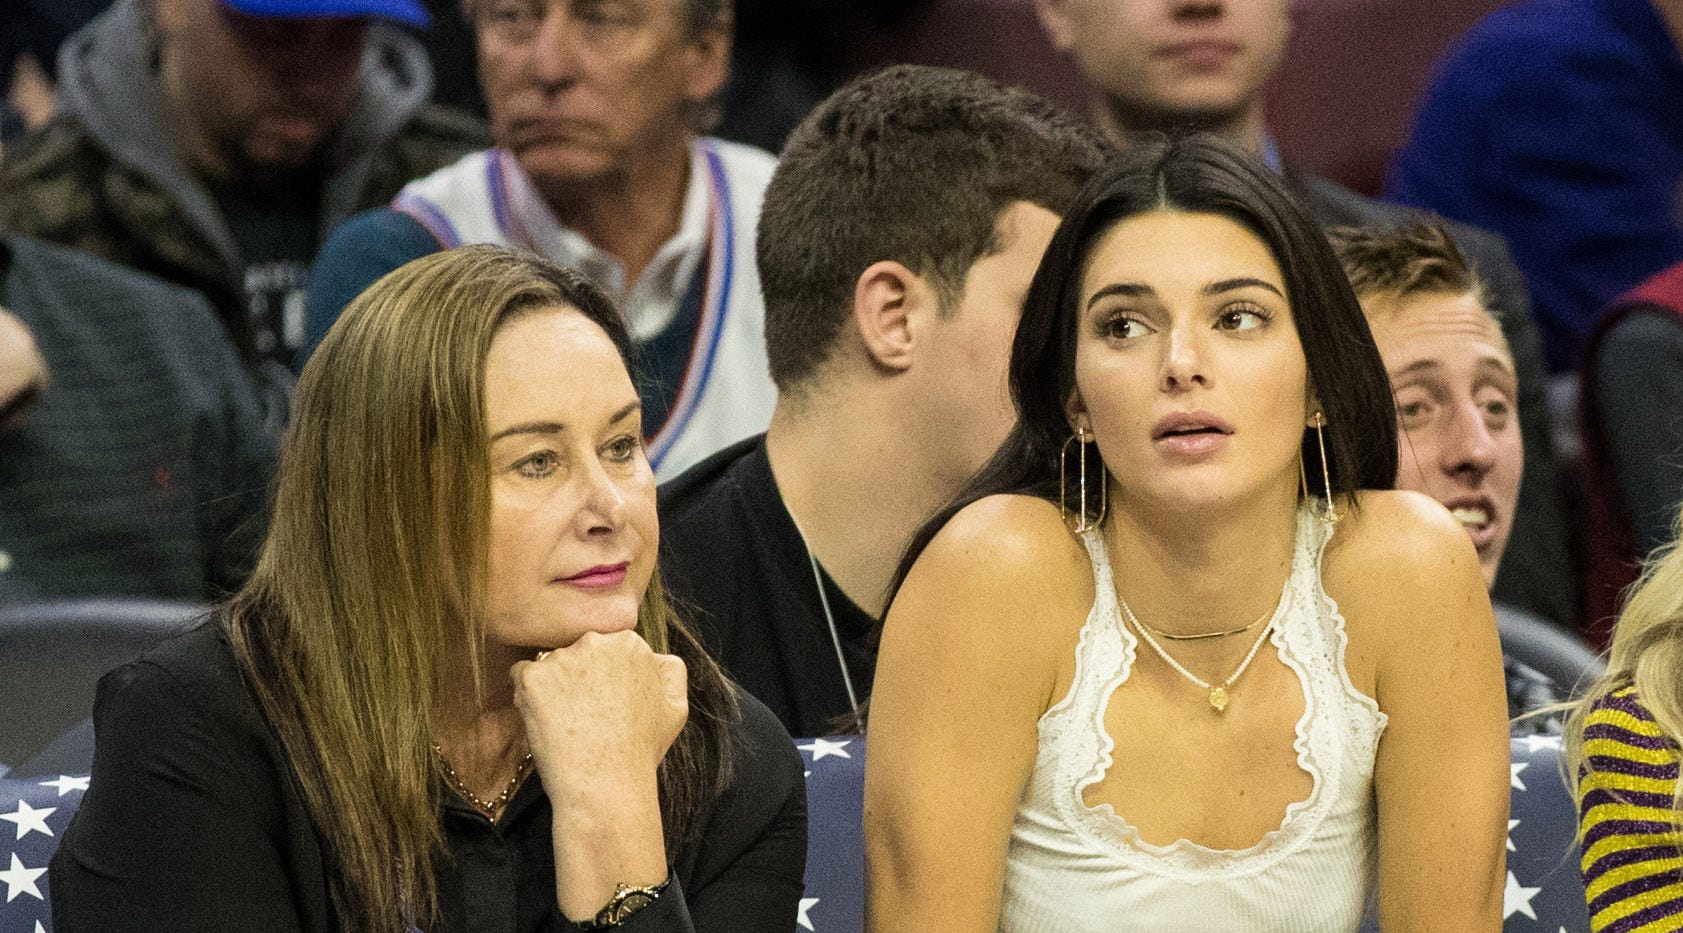 Kendall Jenner, Ben Simmons attend Drexel basketball game together